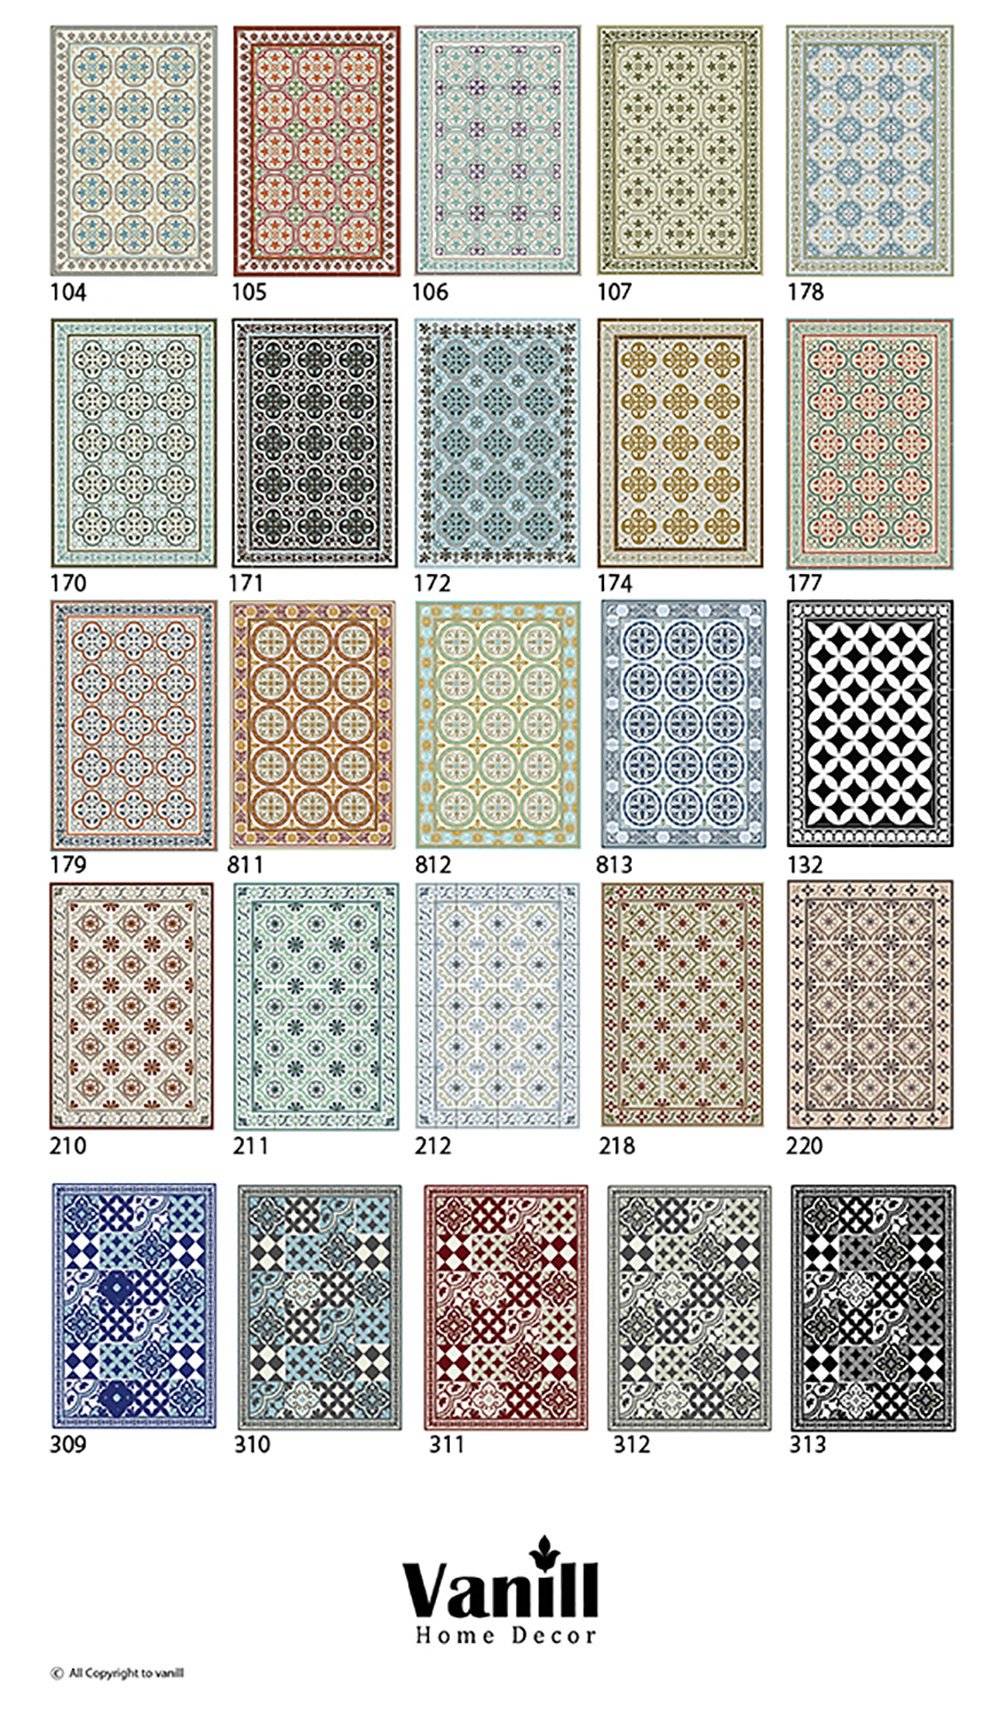 https://www.vanill.co/wp-content/uploads/2018/11/kitchen-mat-kitchen-decor-mat-rustic-kitchen-decorative-tiles-area-rug-printed-big-mat-pvc-mat-beige-bordeaux-no-603-5bddcdf8.jpg